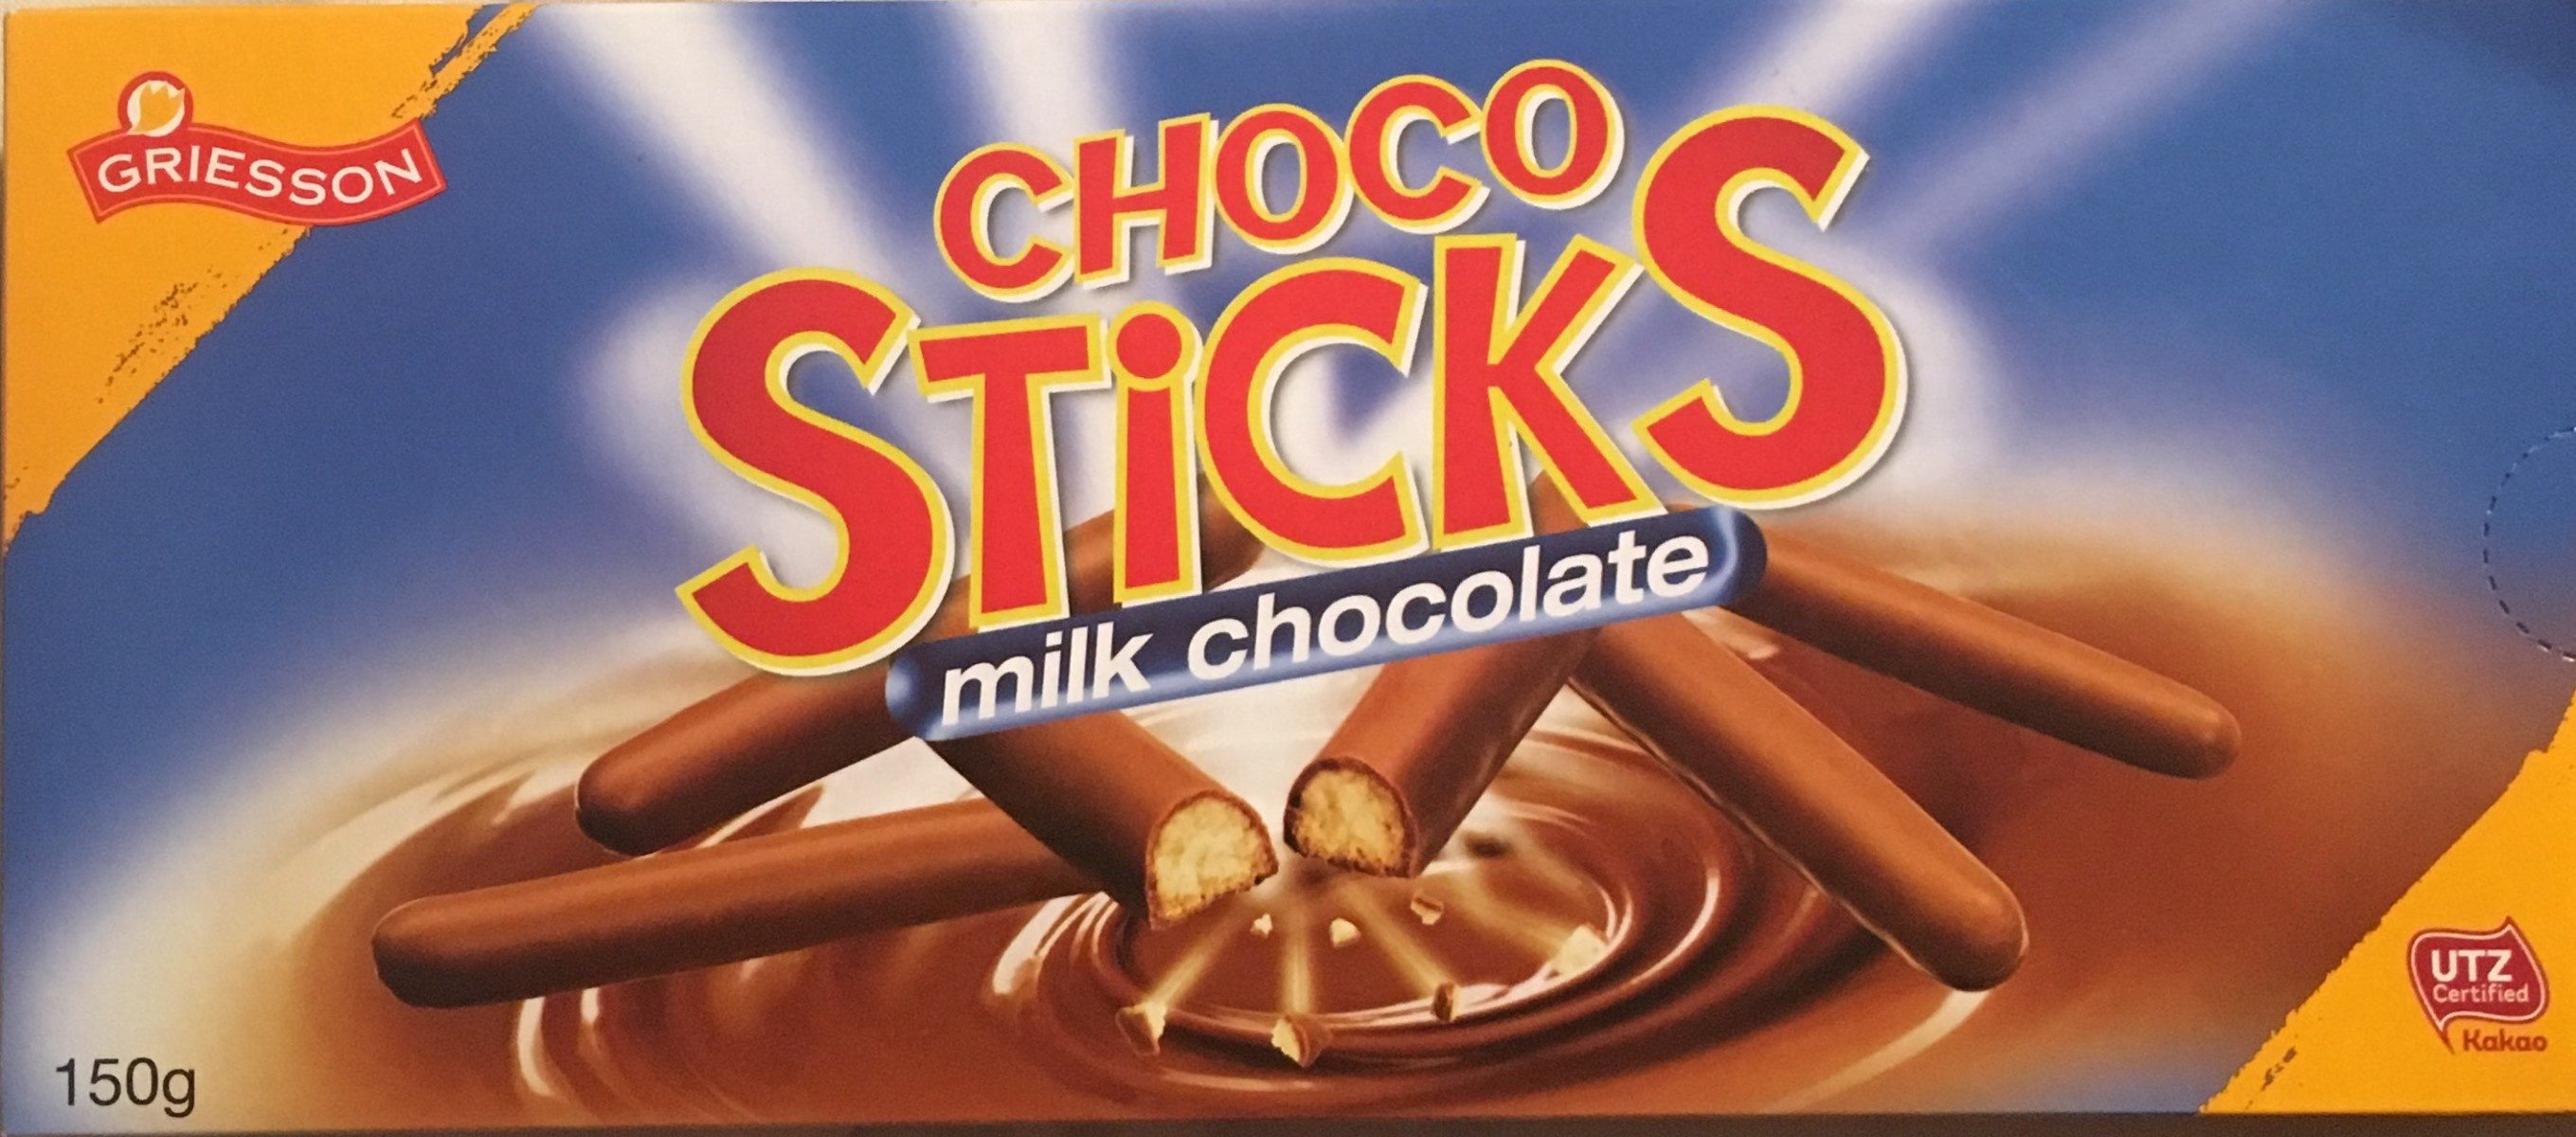 Choco stick - Product - fr